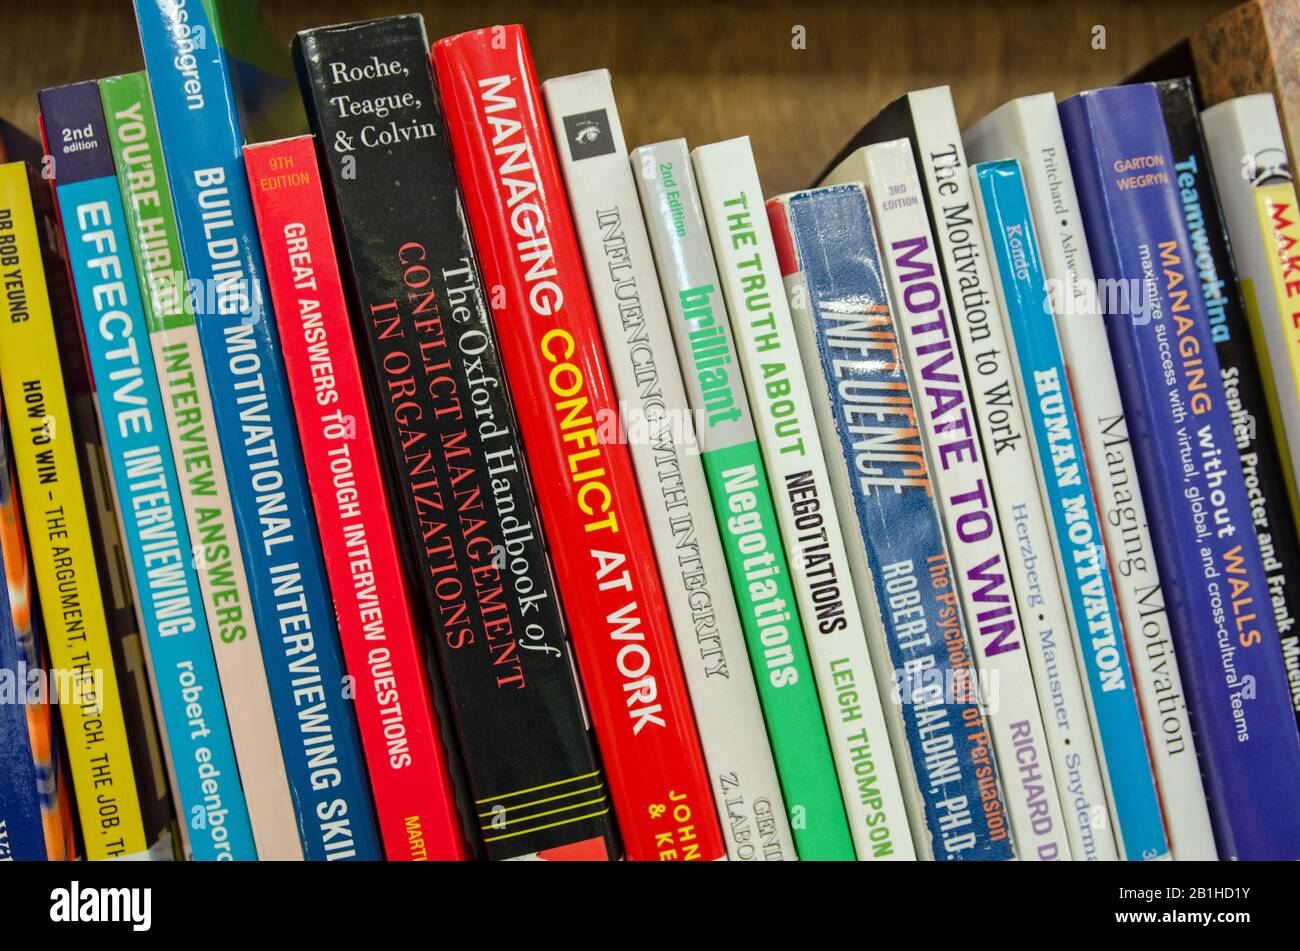 London, UK - September 21, 2019: Management books on display on a library bookshelf. Stock Photo